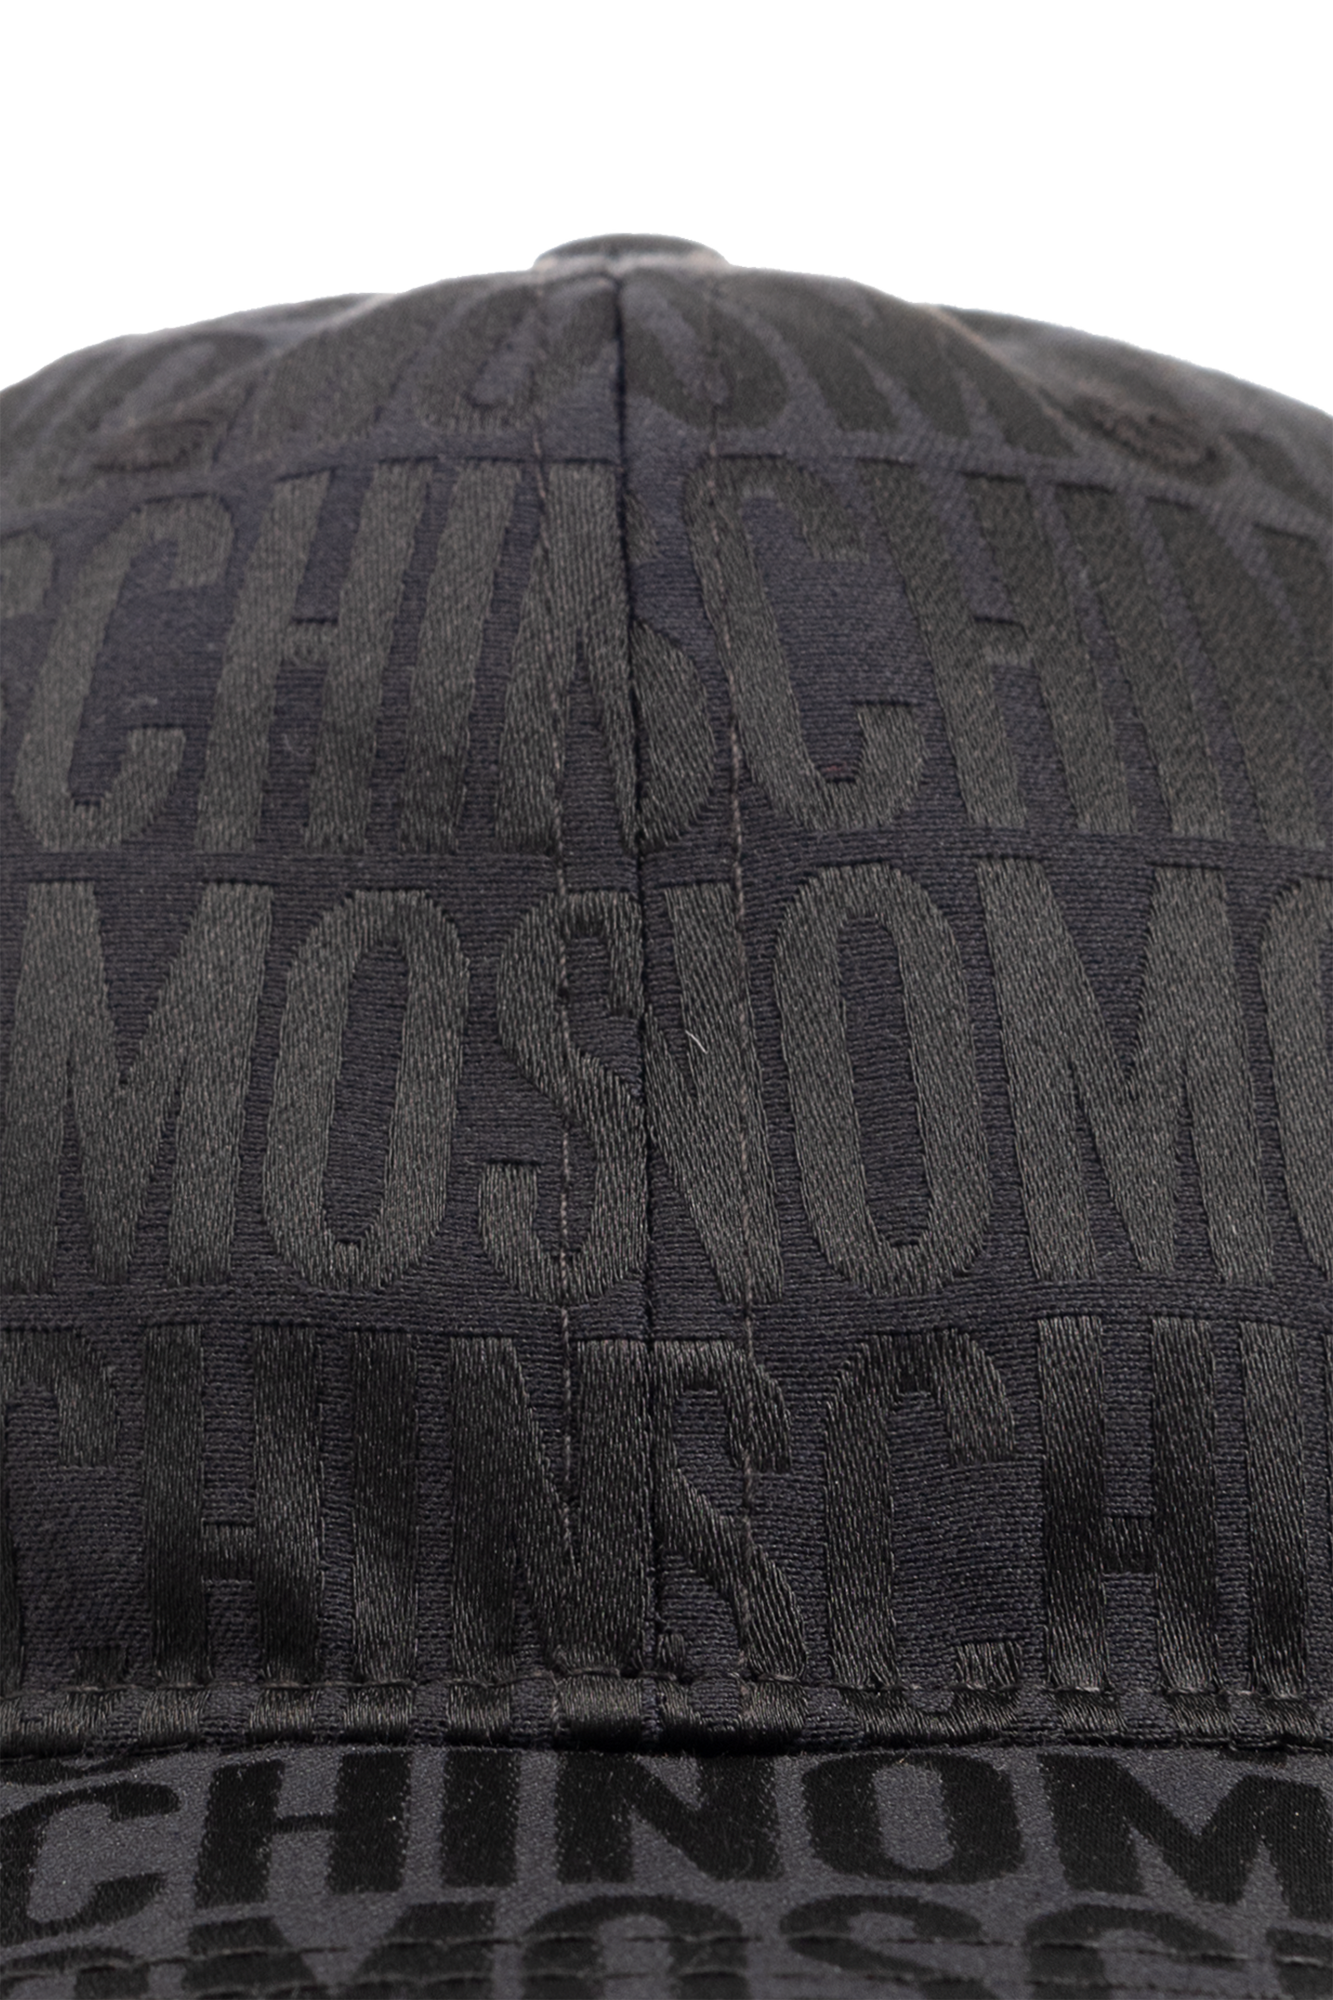 Black Beanie with logo Moschino - Vitkac Australia